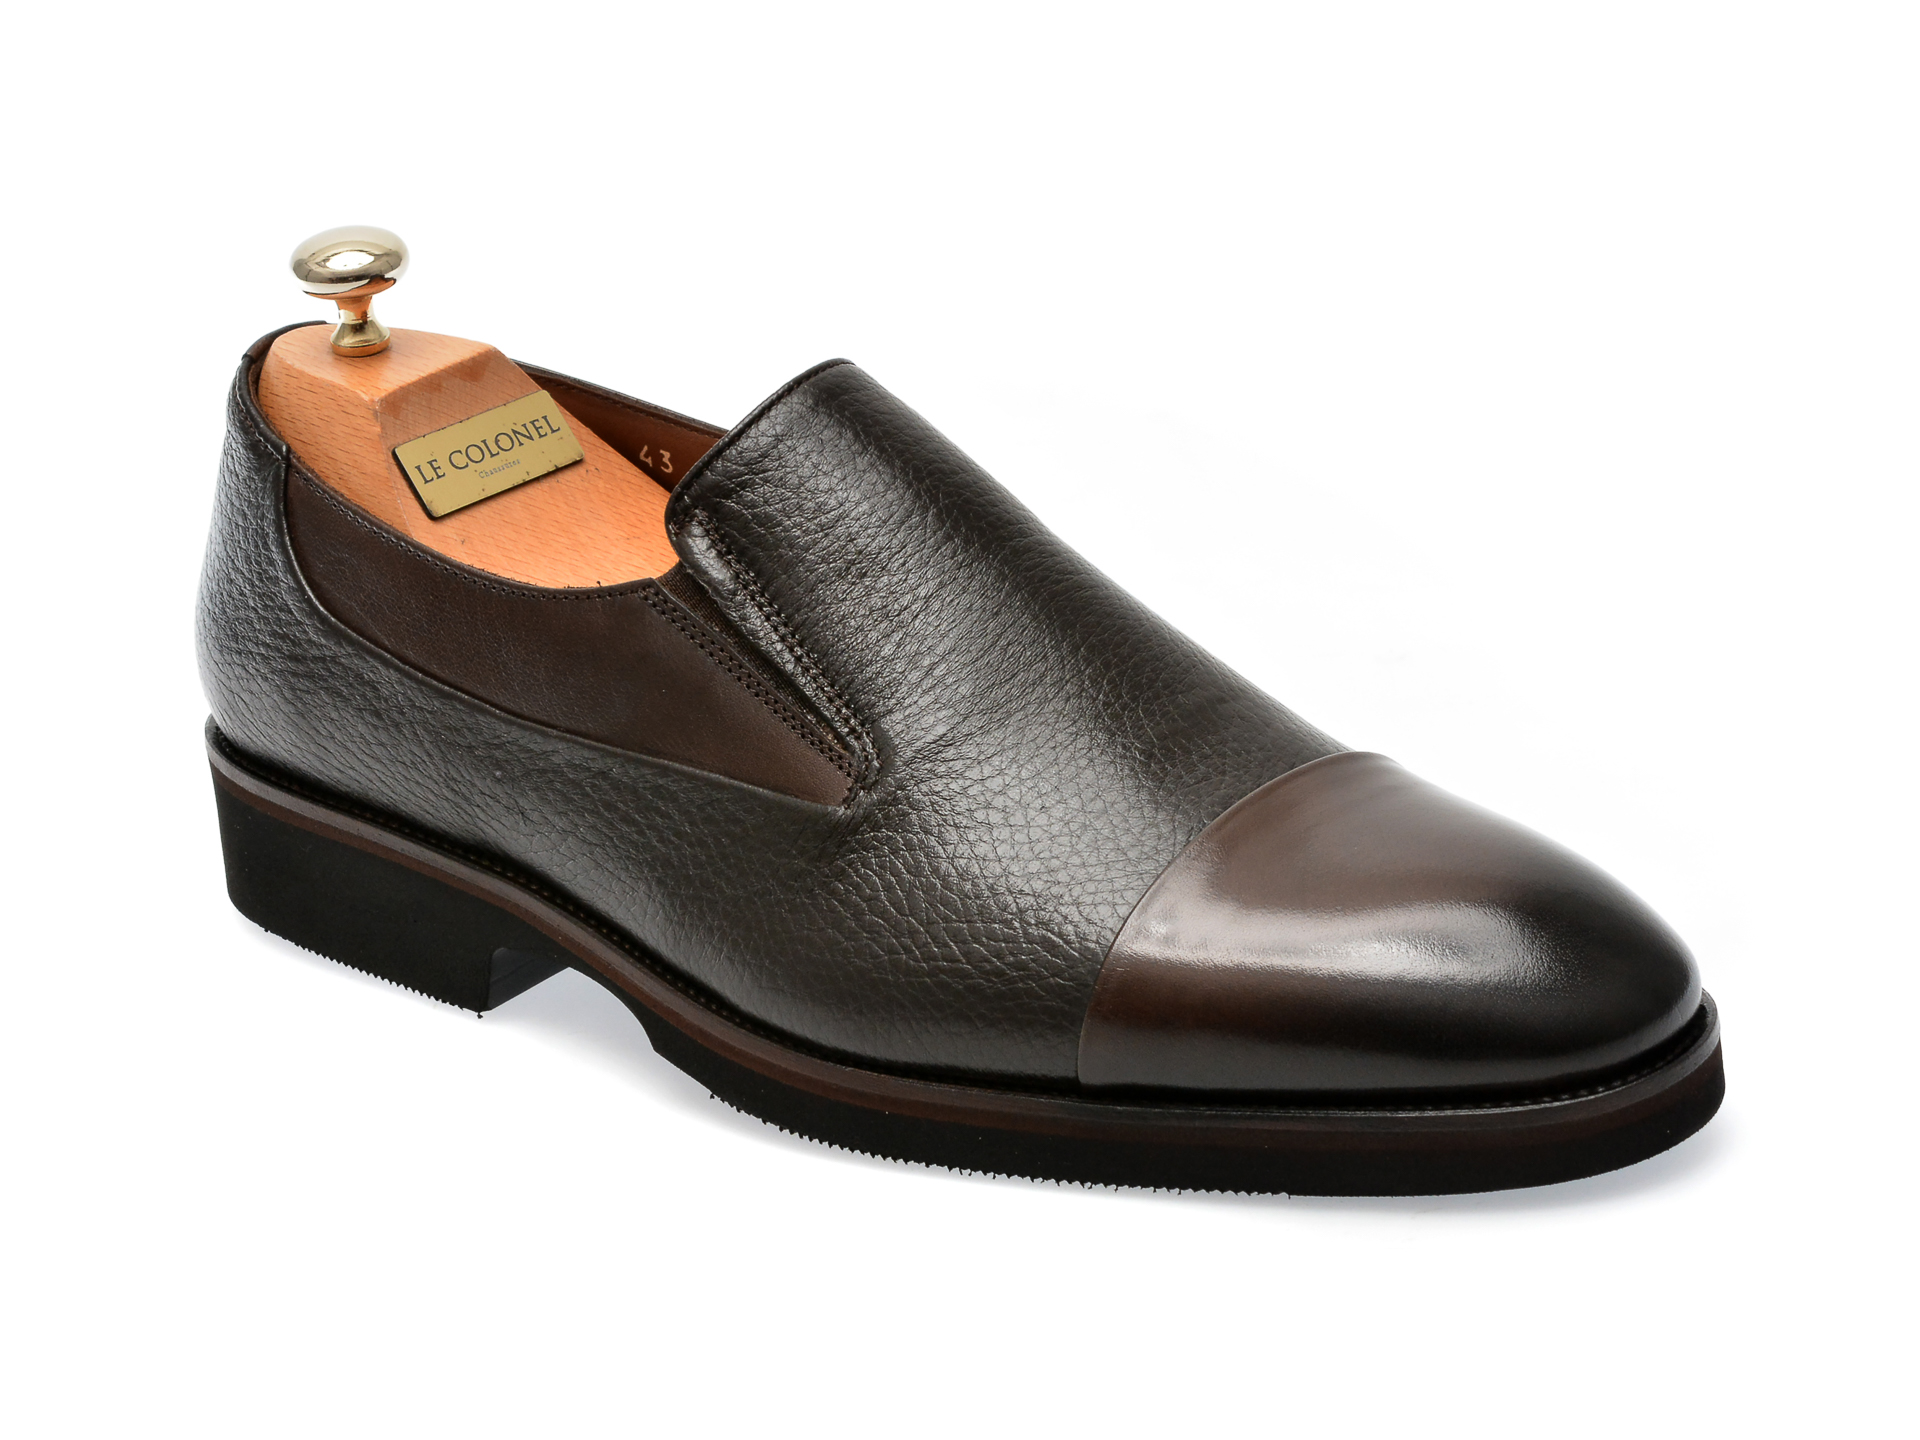 Pantofi LE COLONEL maro, 49879, din piele naturala /barbati/pantofi